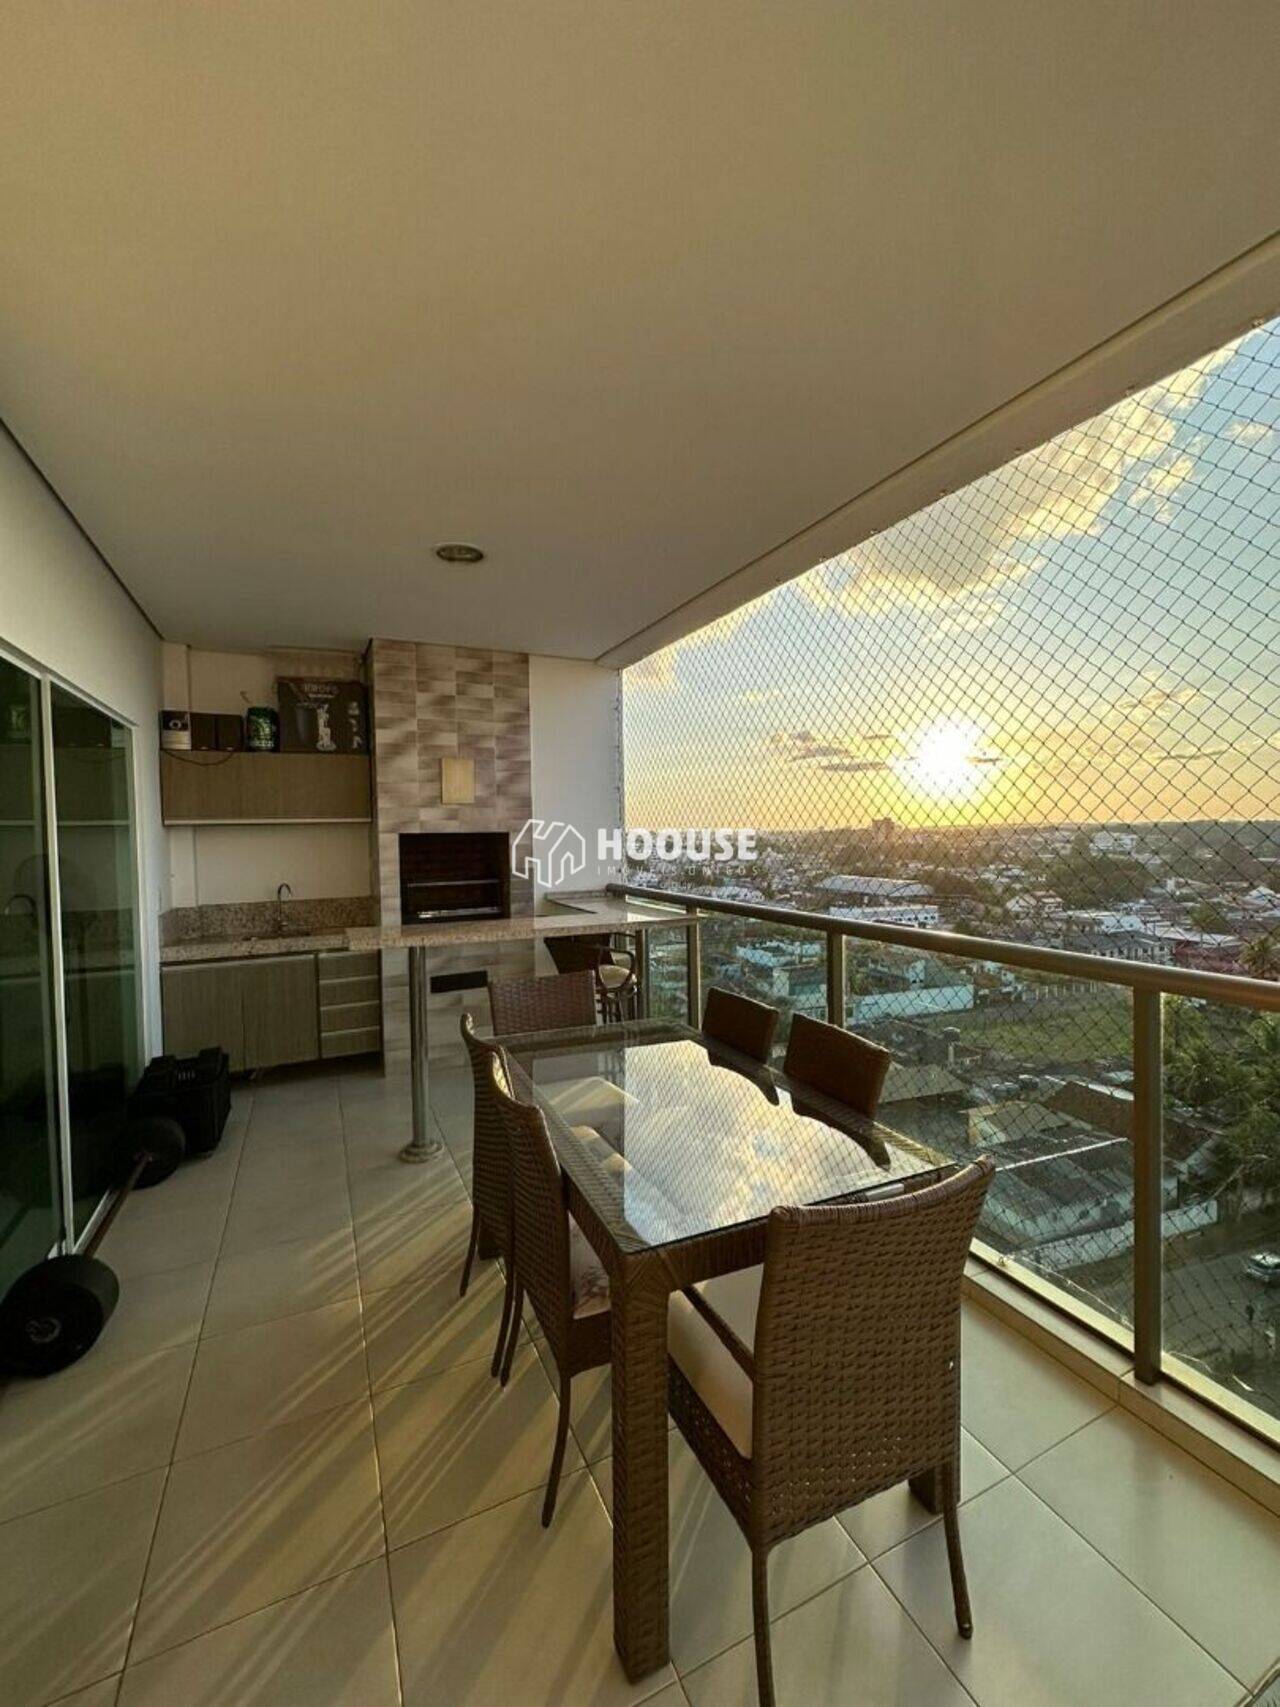 Apartamento Monet Residence, Rio Branco - AC